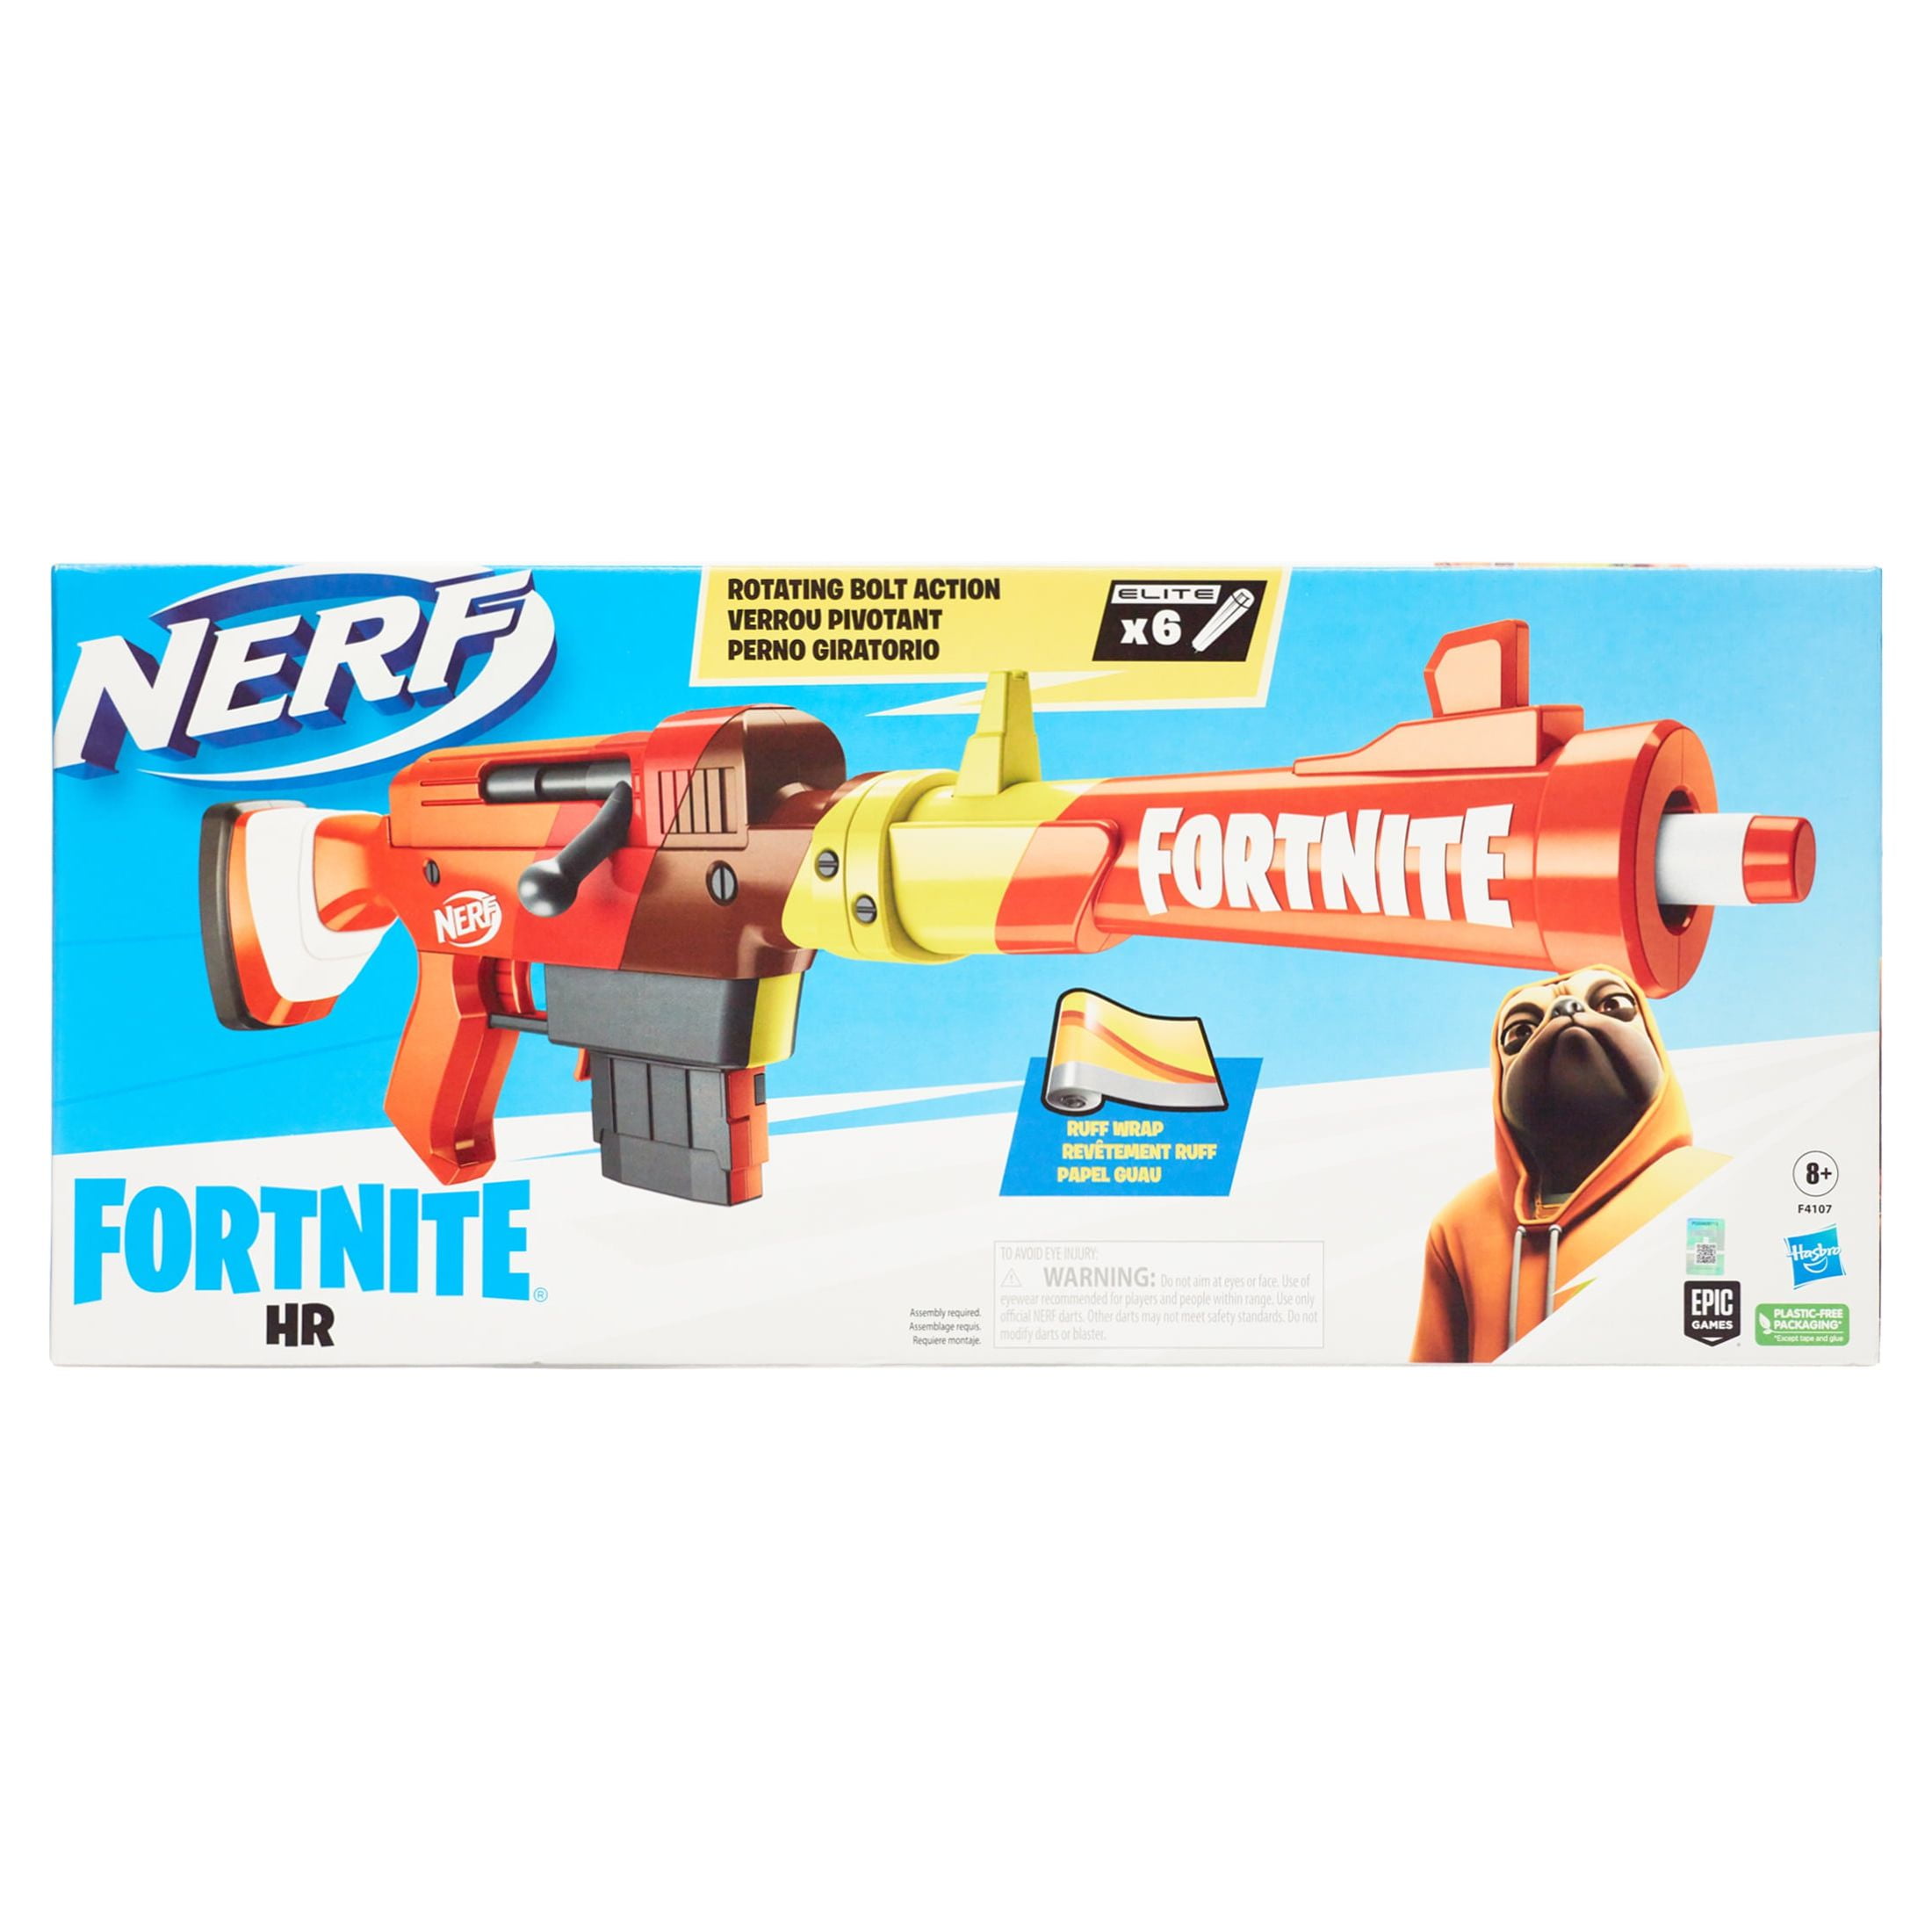 Nerf Fortnite HR Rotating Bolt Action Kids Toy Blaster fr Boys and